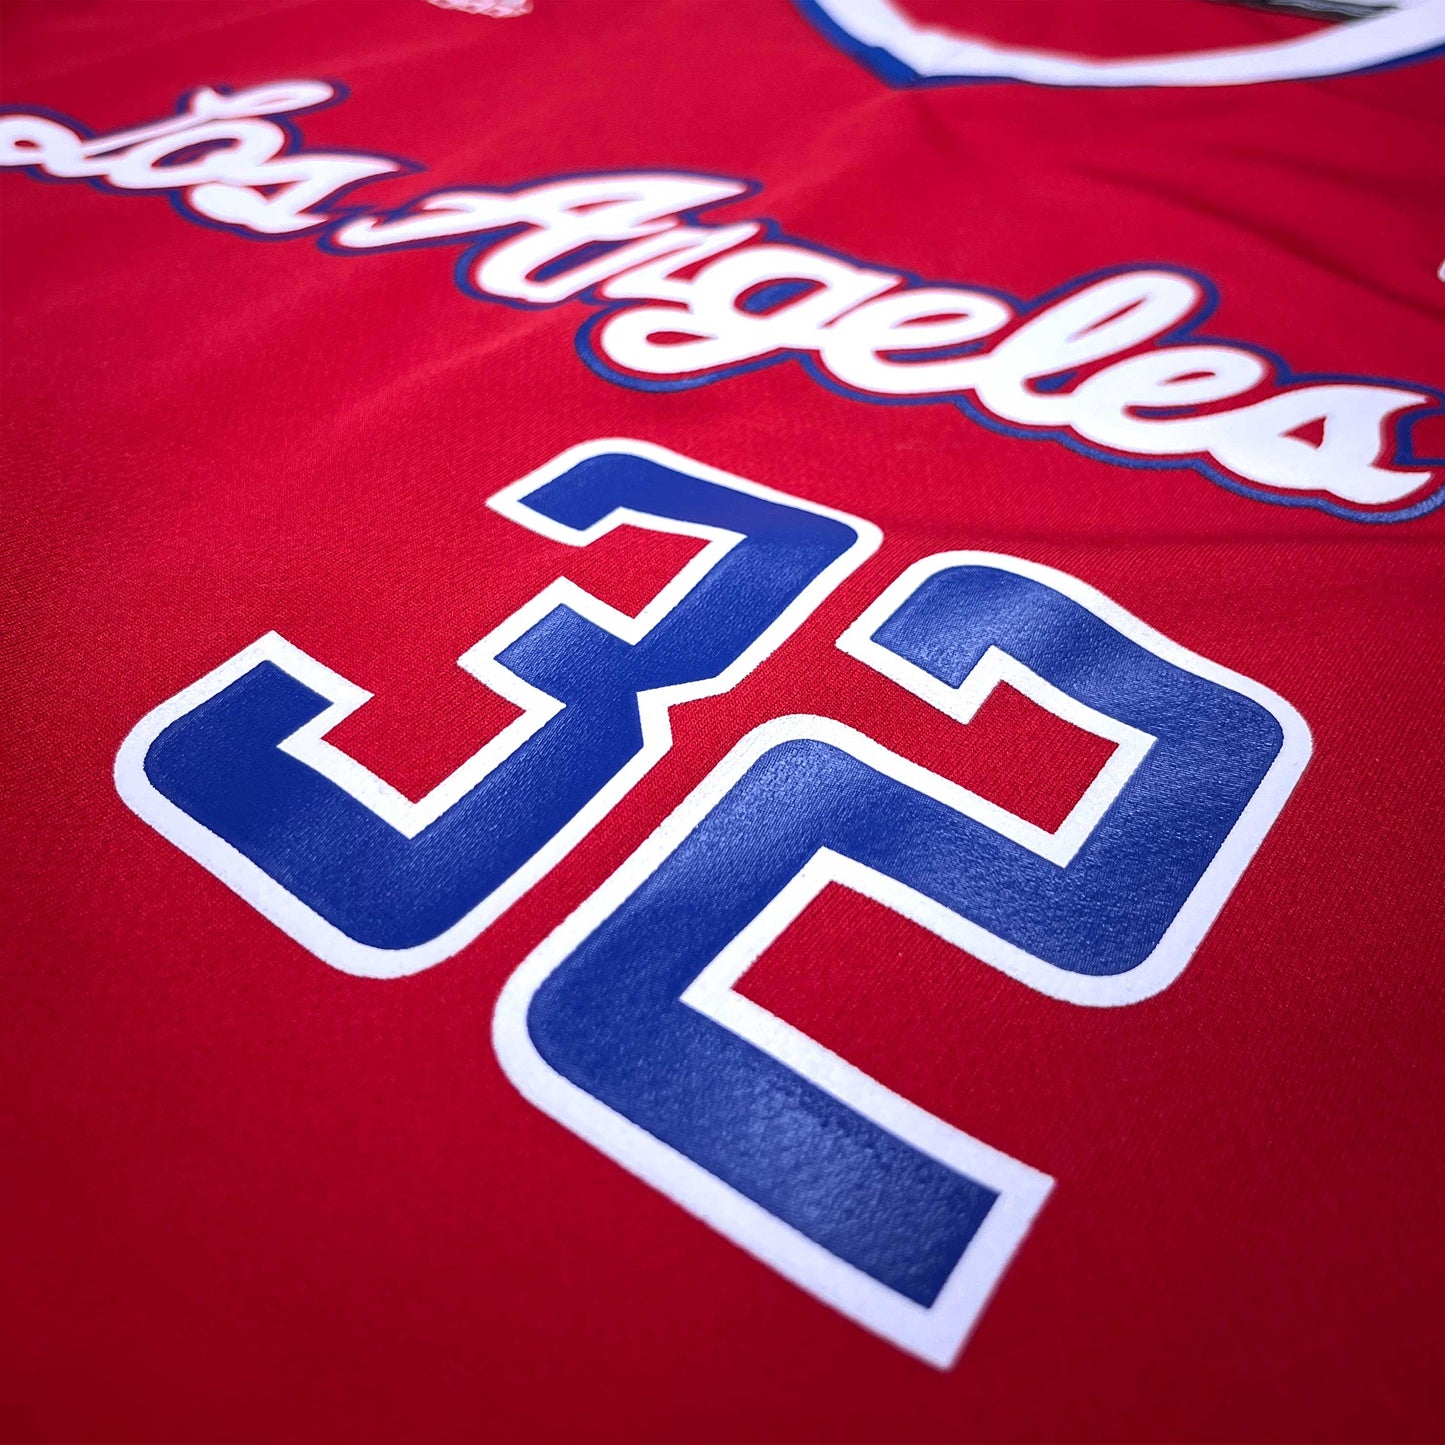 Los Angeles Clippers - Blake Griffin - Größe XL - Adidas - NBA Trikot